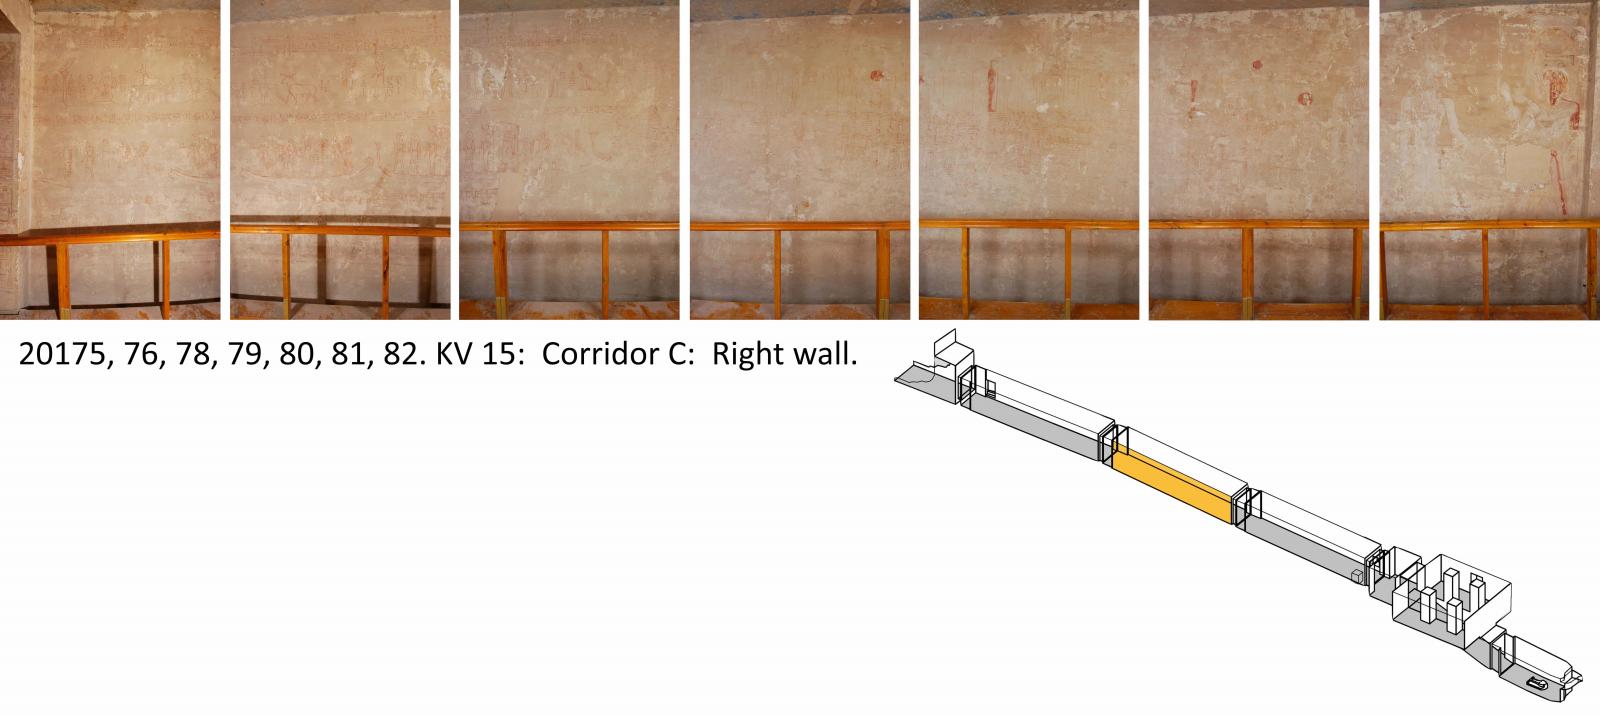 Right wall, corridor C. 